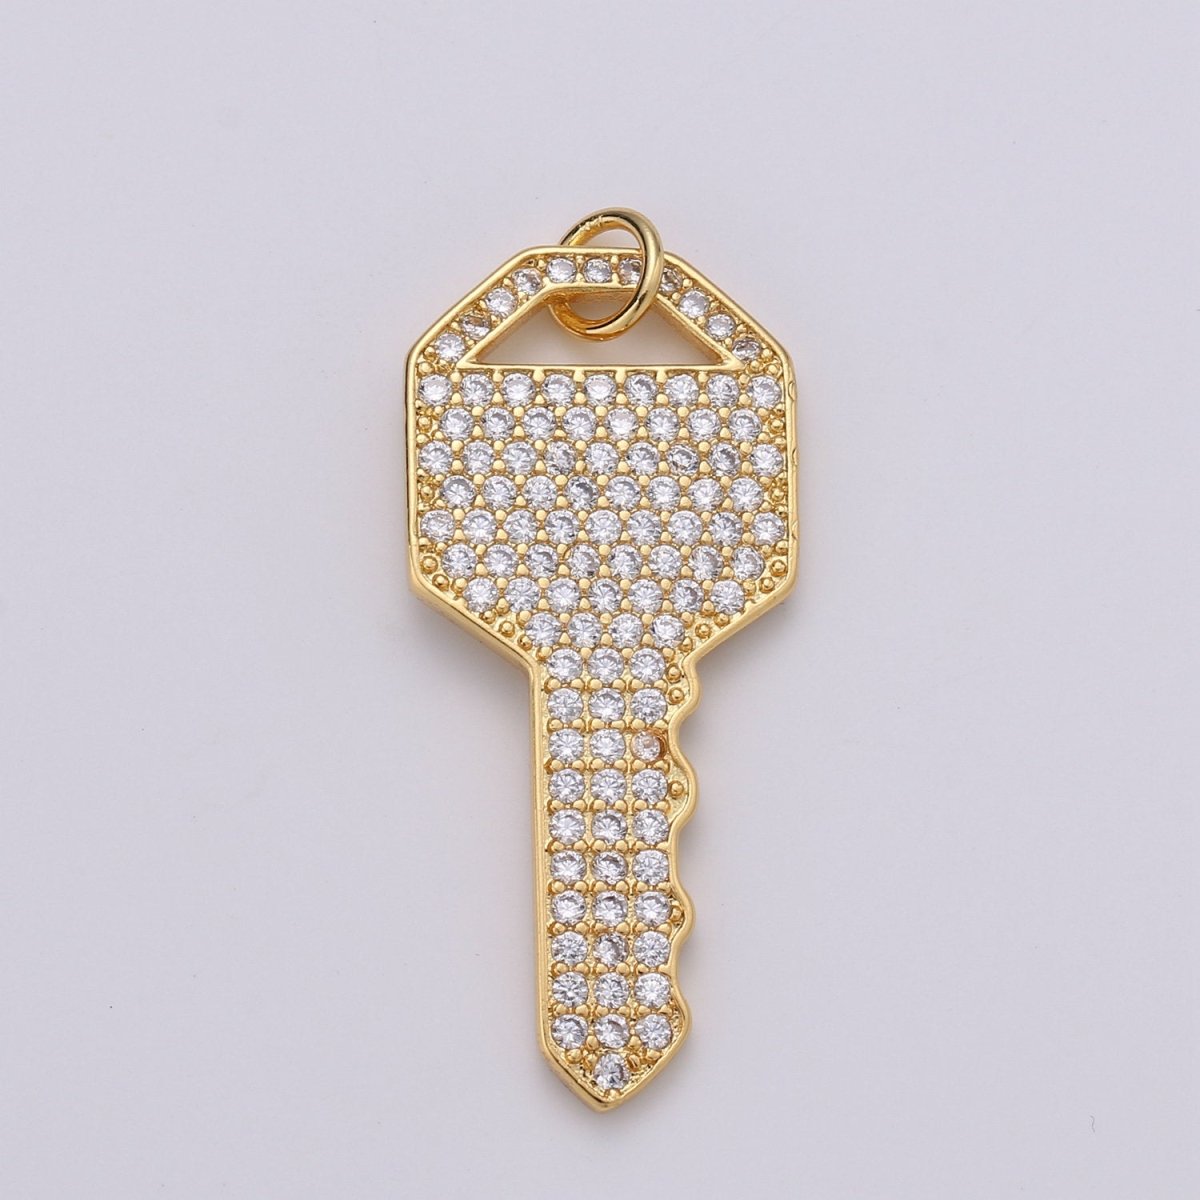 Gold Key CZ Micro Pave Charm Pendant, Key Charm, Key Pendant, Key Necklace, Charm Bracelet, Cubic Zirconia, Charm, 34x15mm D-340 - DLUXCA